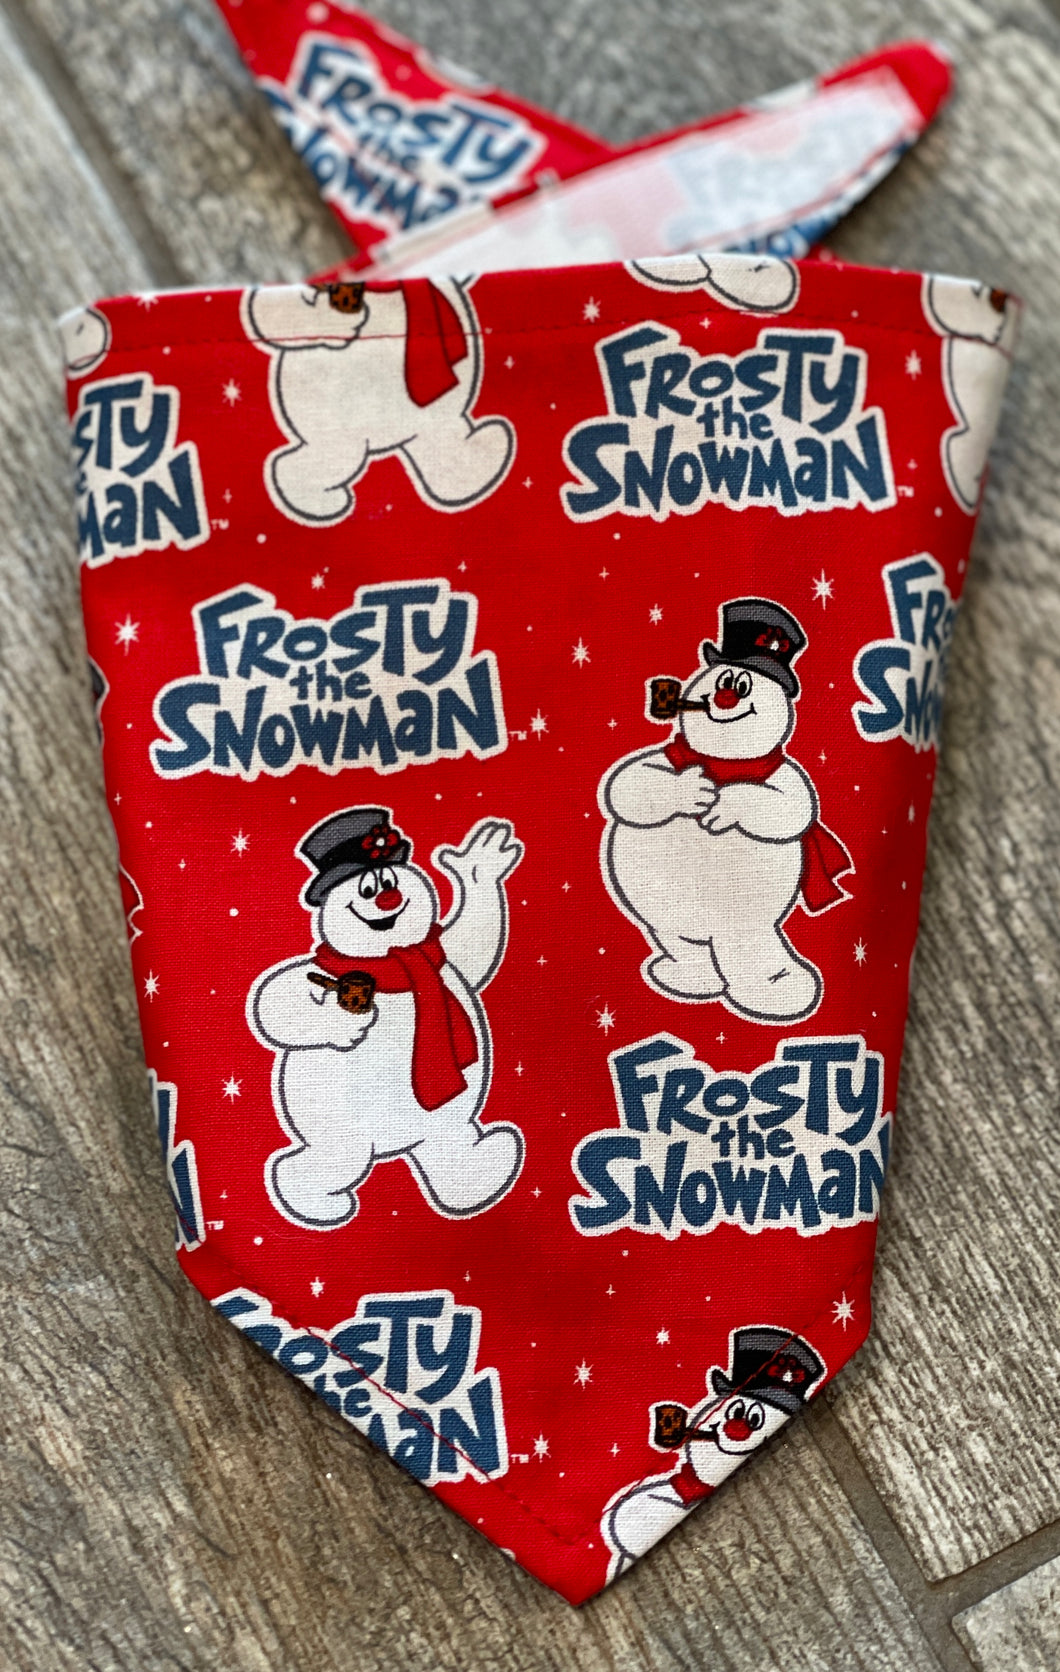 Frosty the Snowman Bandana